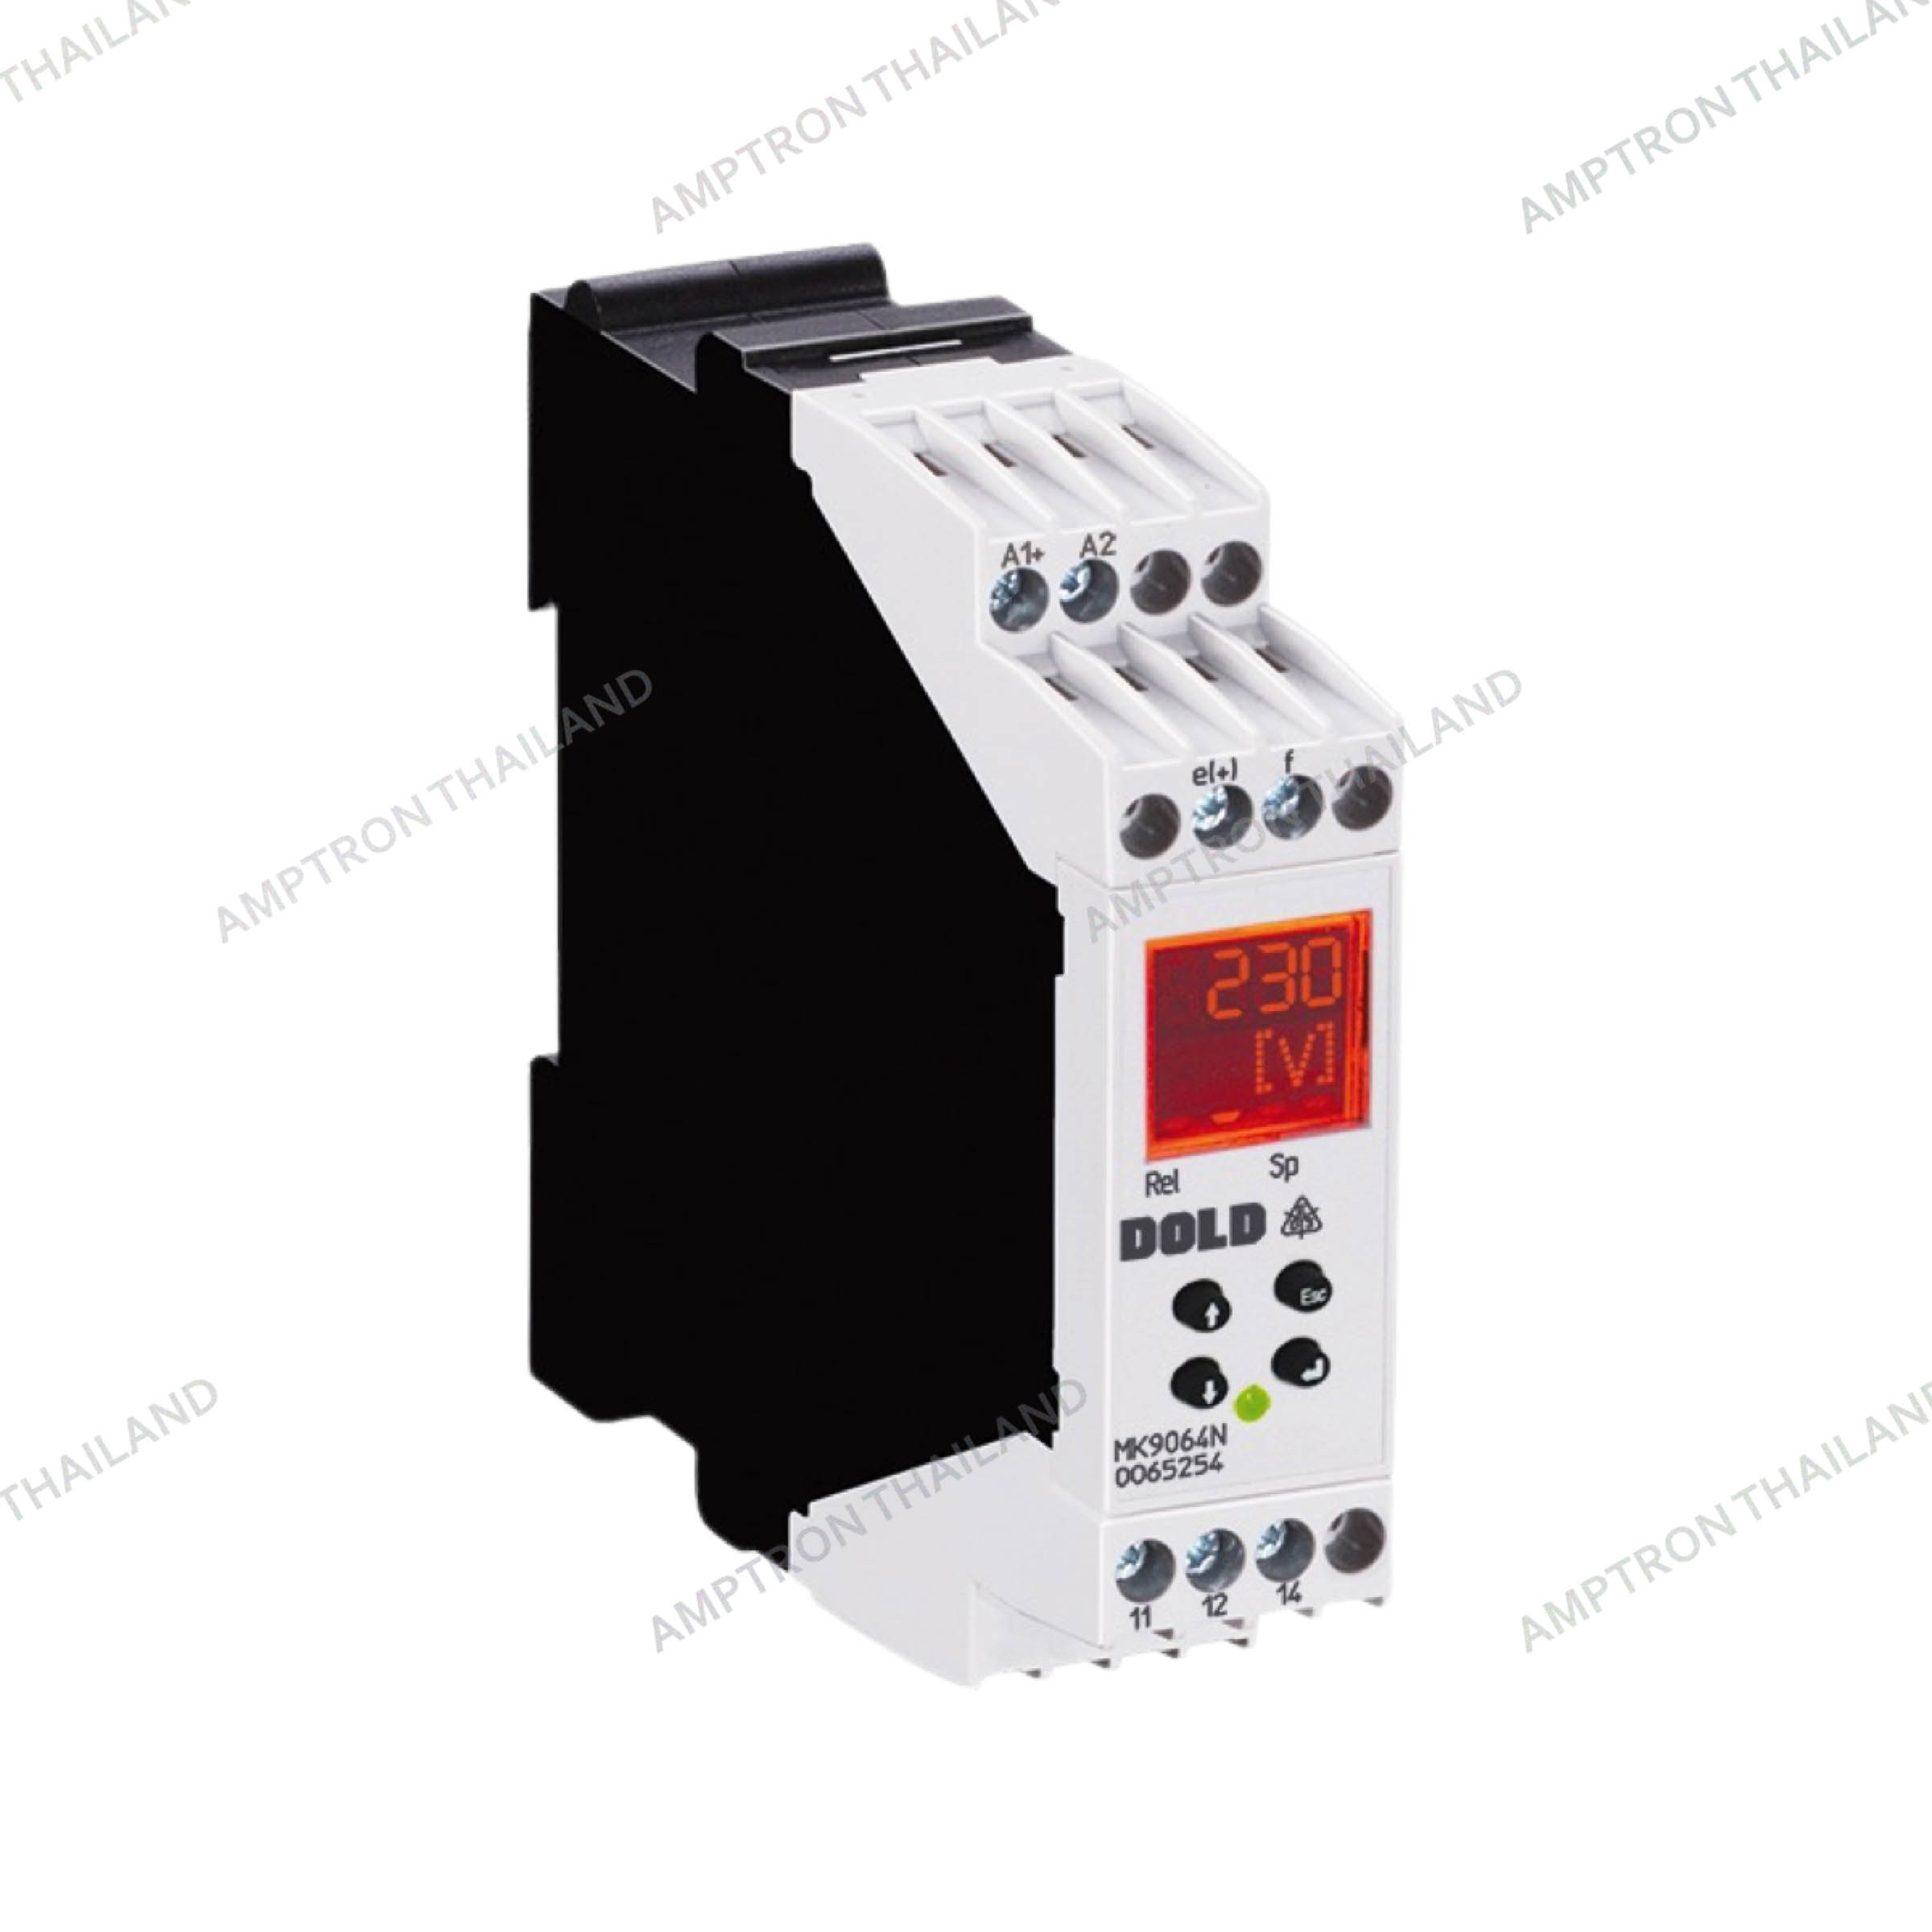 MH 9064 Varimeter Voltage relay